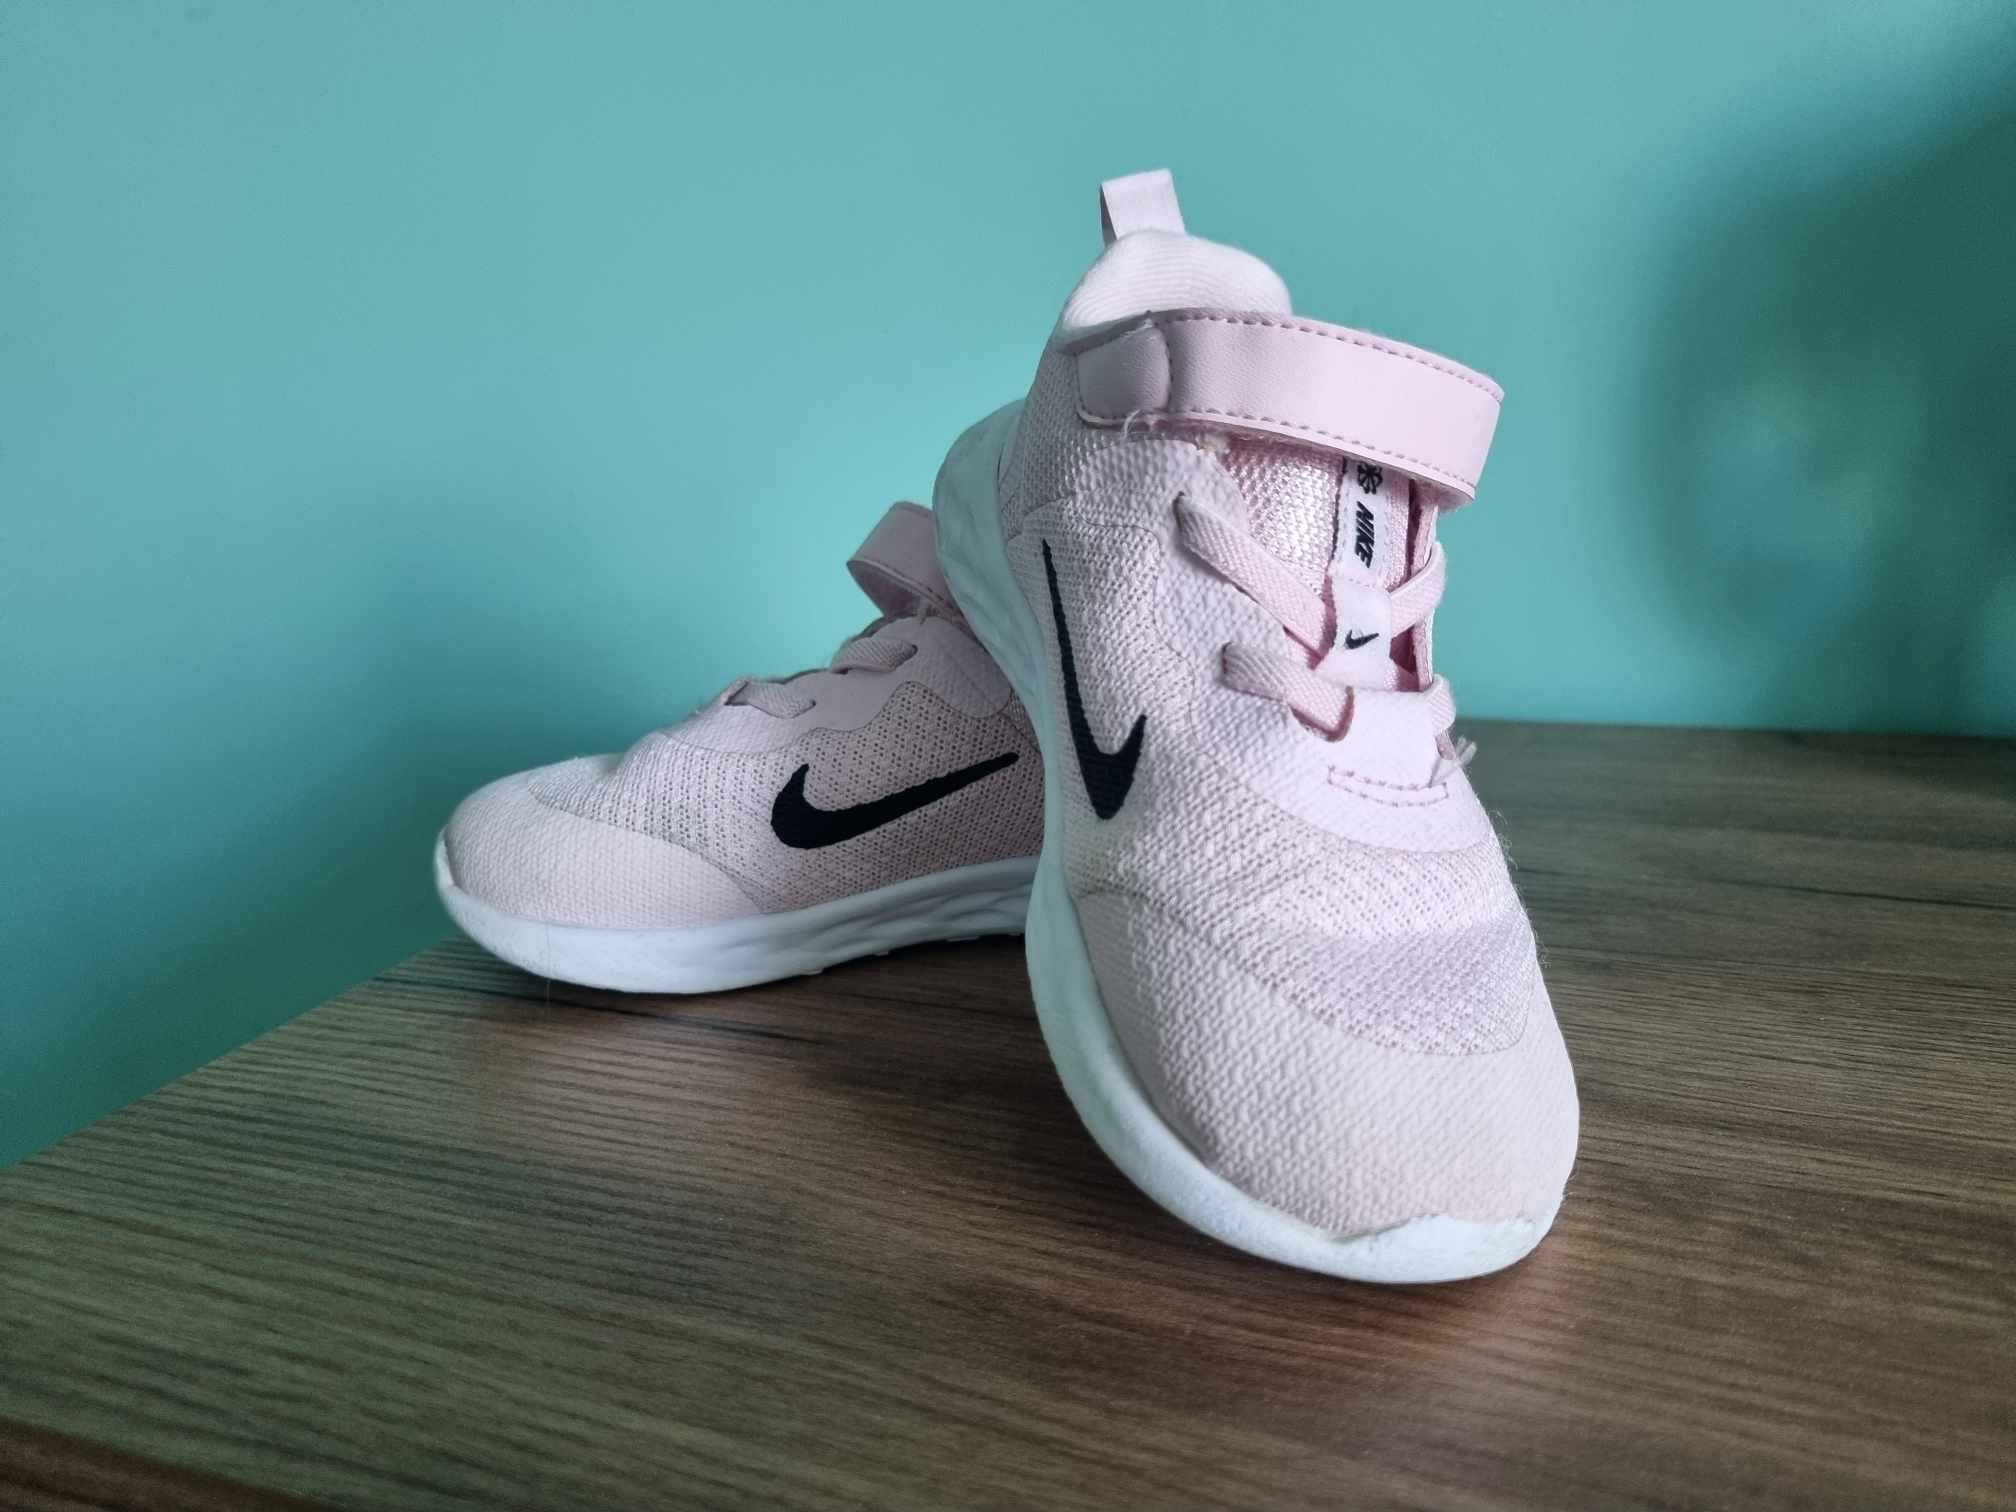 Adidasi Nike fetita, Revolution 6, Roz pal, marimea 26